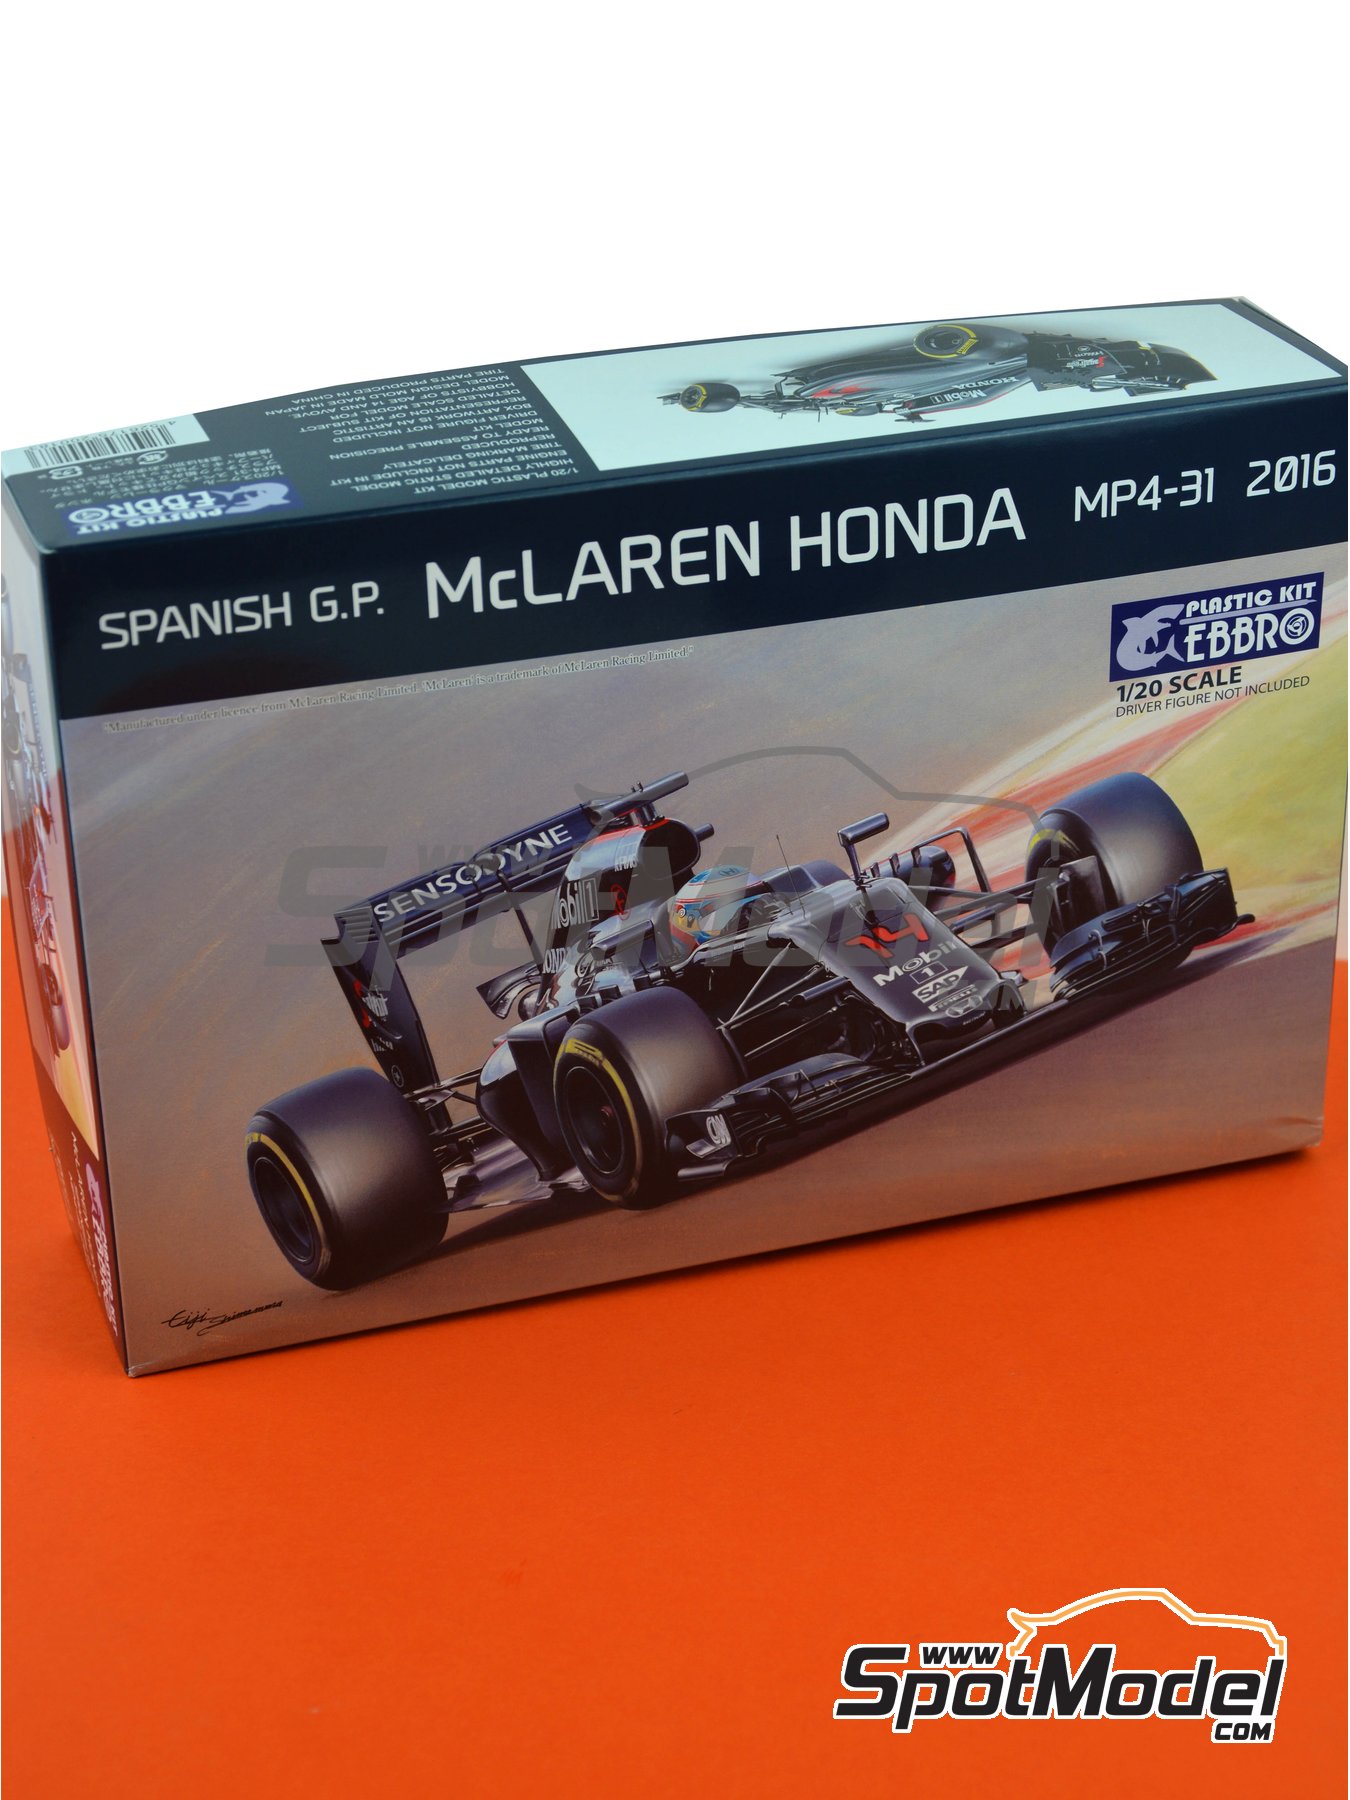 Ebbro 20018: Car scale model kit 1/20 scale - McLaren Honda MP4/31